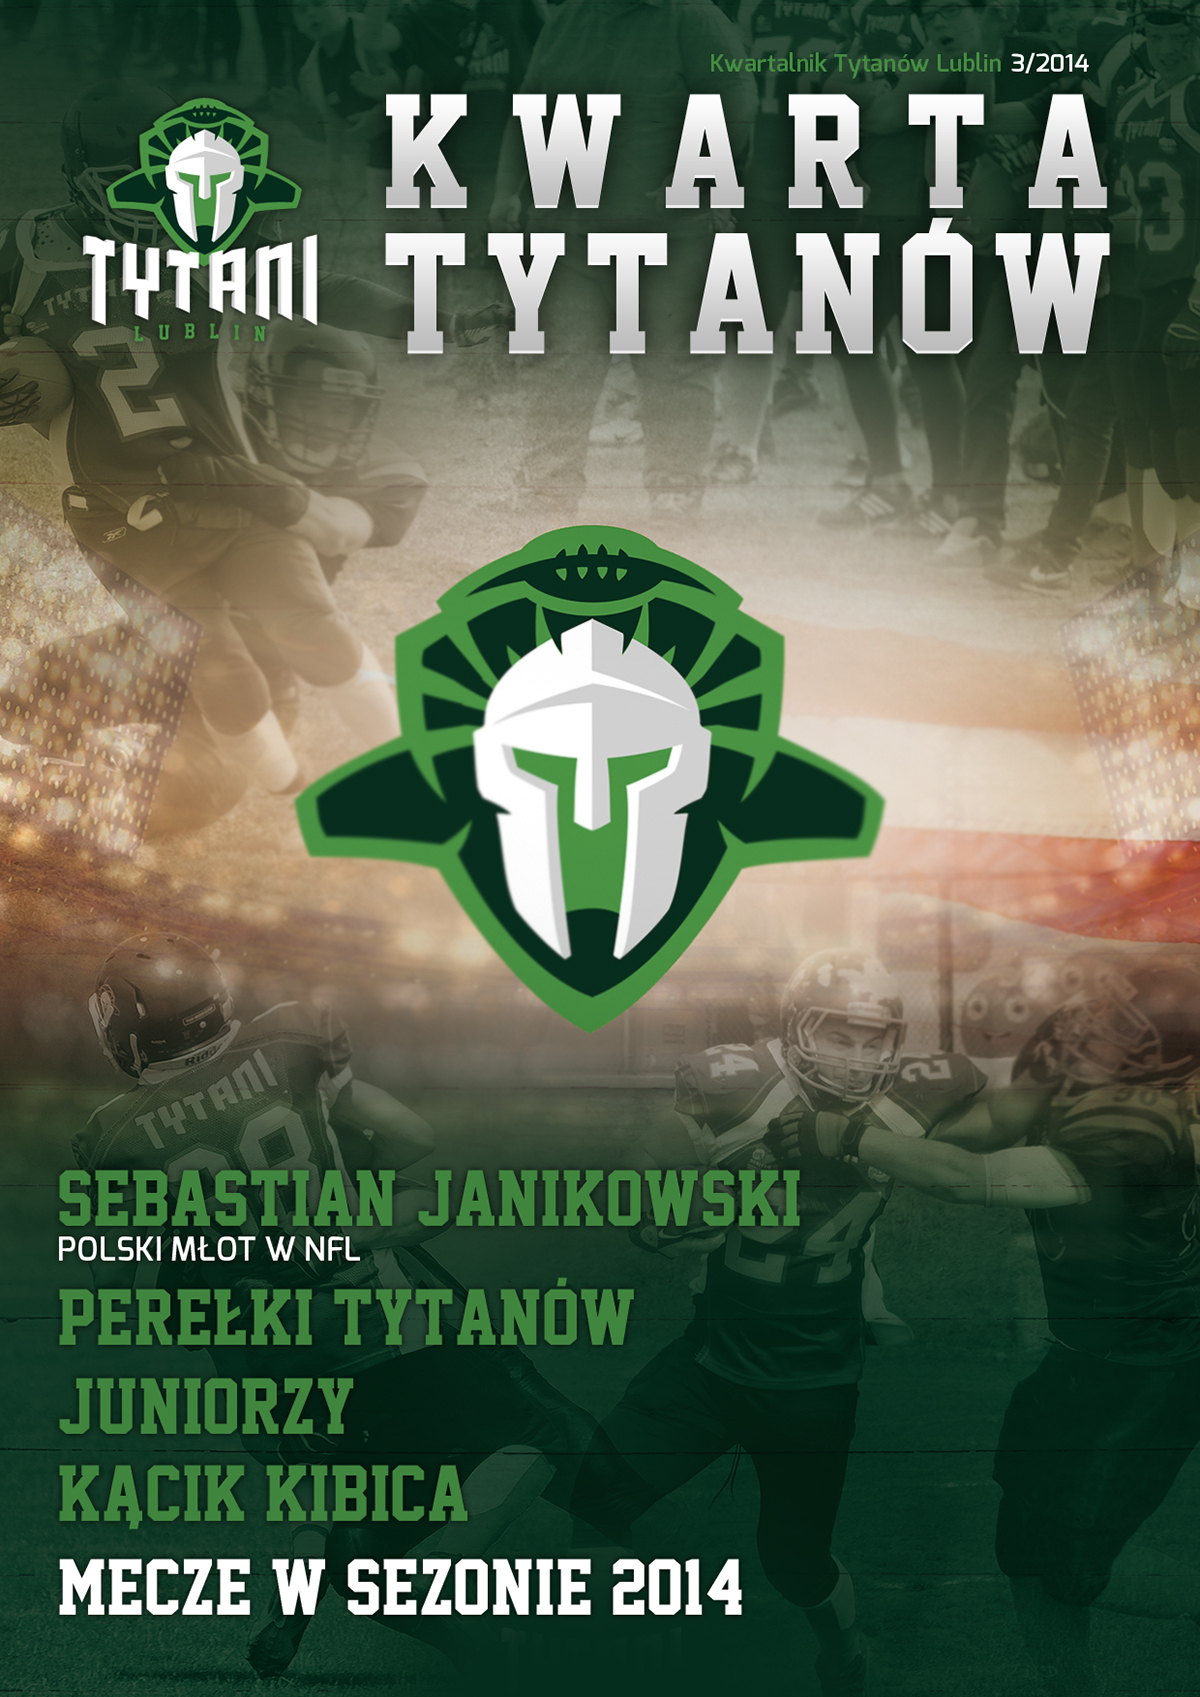 american football tytani lublin Touchdown ball sport team identity Sword game nfl titans plfa logo